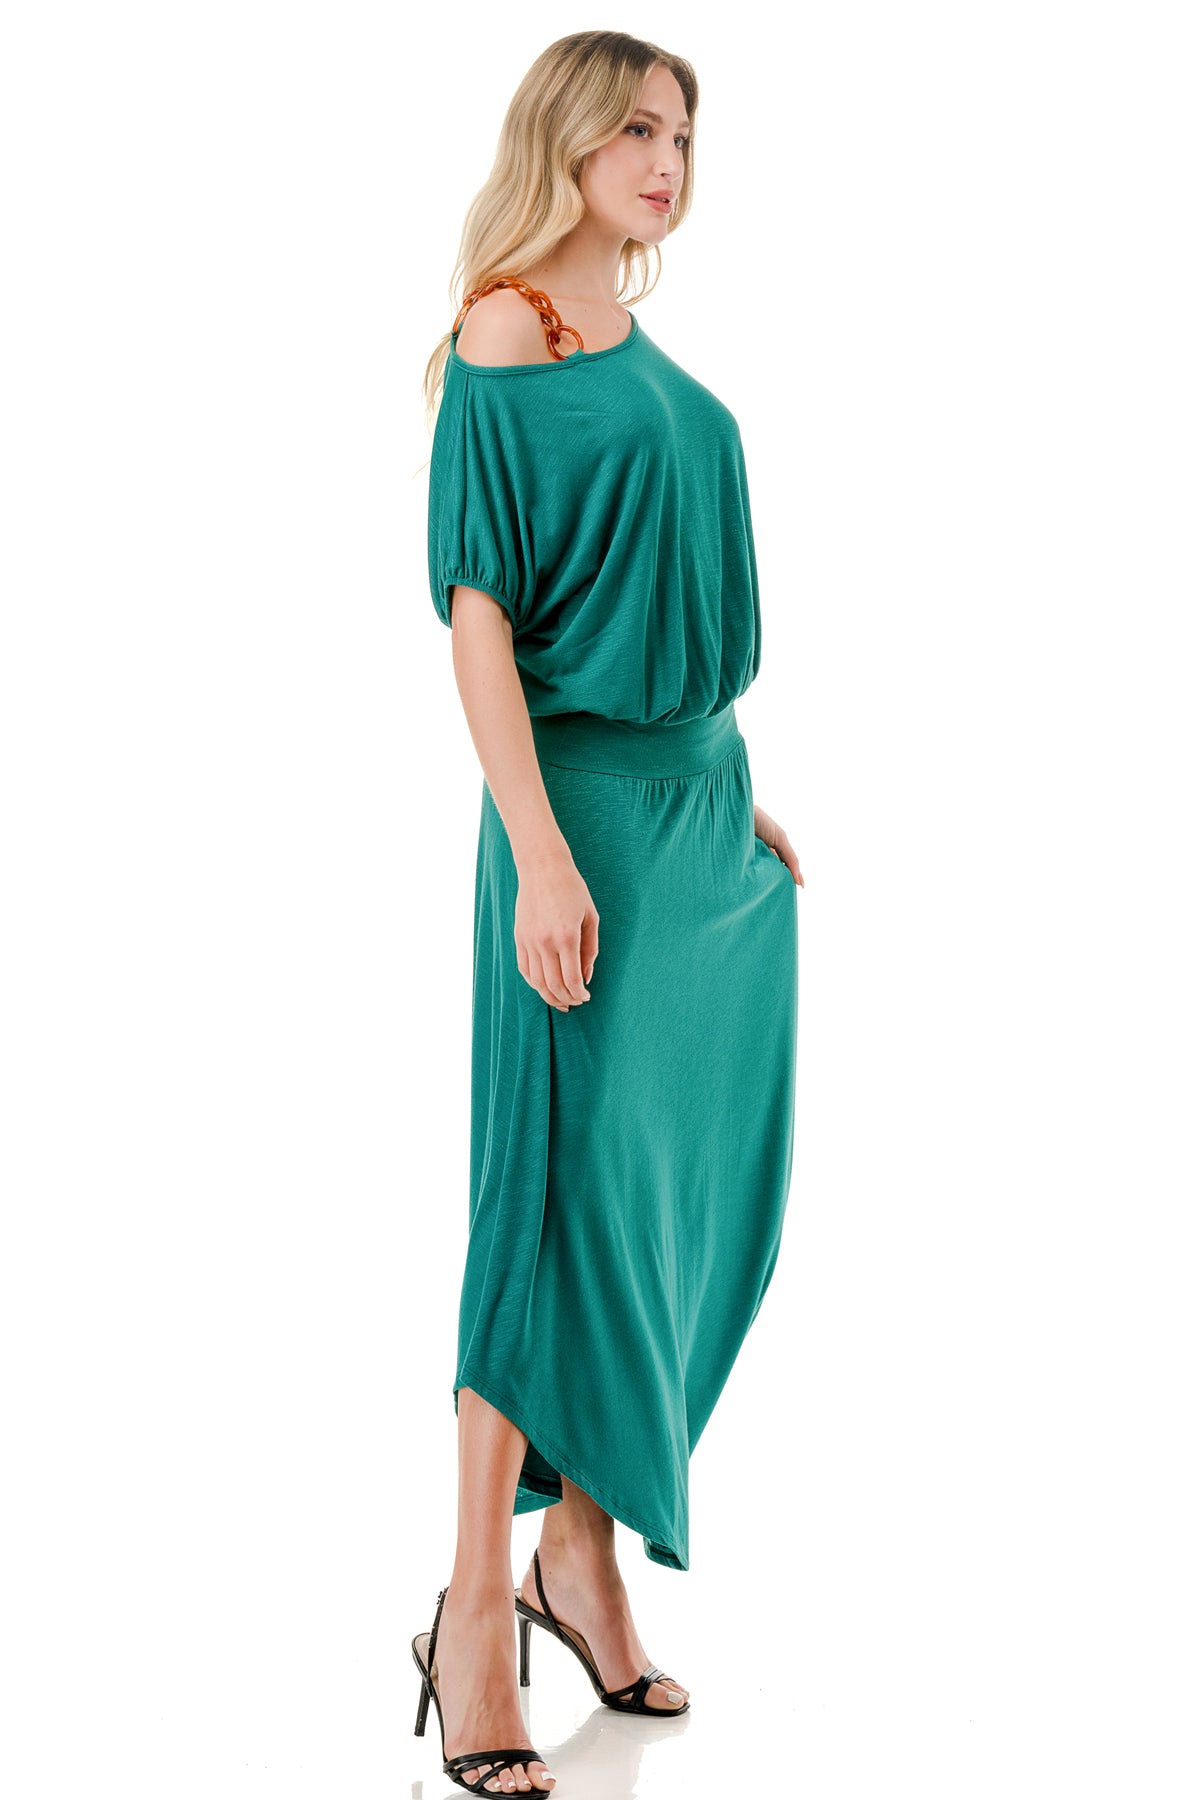 LOUISA ONE SHOULDER DRESS (KELLY GREEN)- VD3295